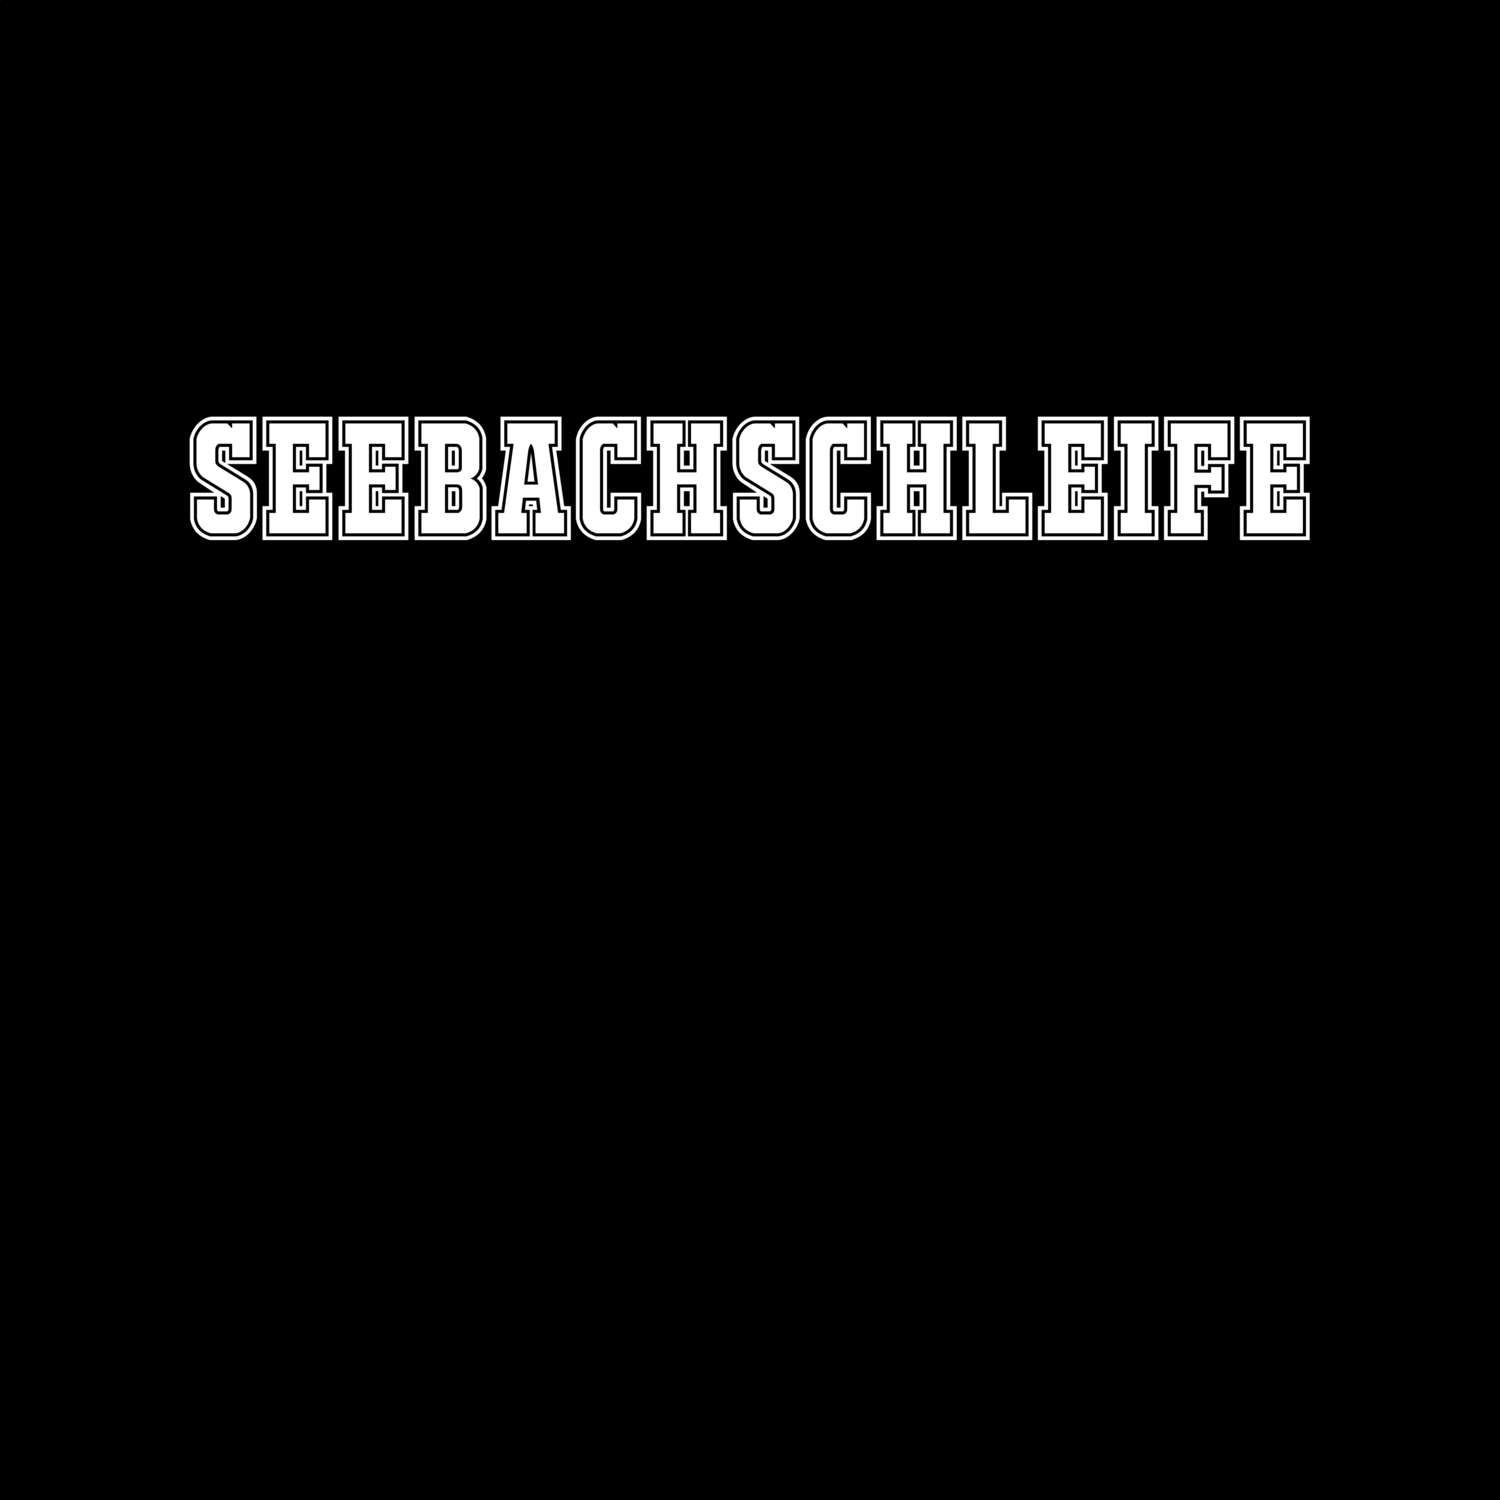 Seebachschleife T-Shirt »Classic«